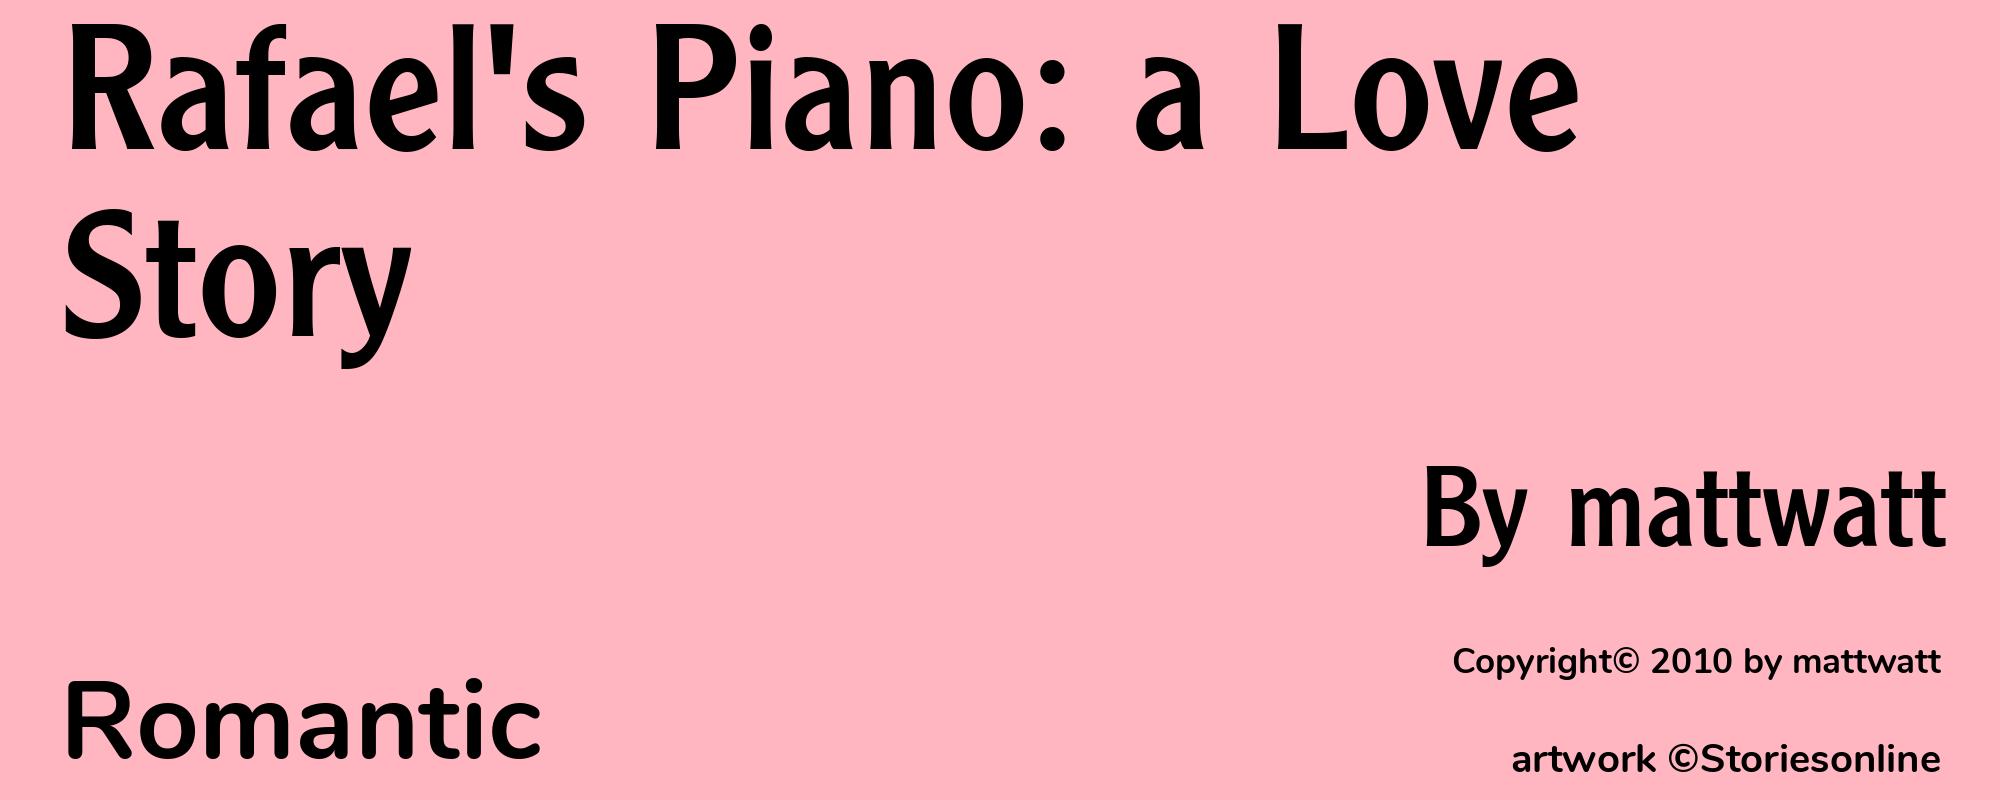 Rafael's Piano: a Love Story - Cover